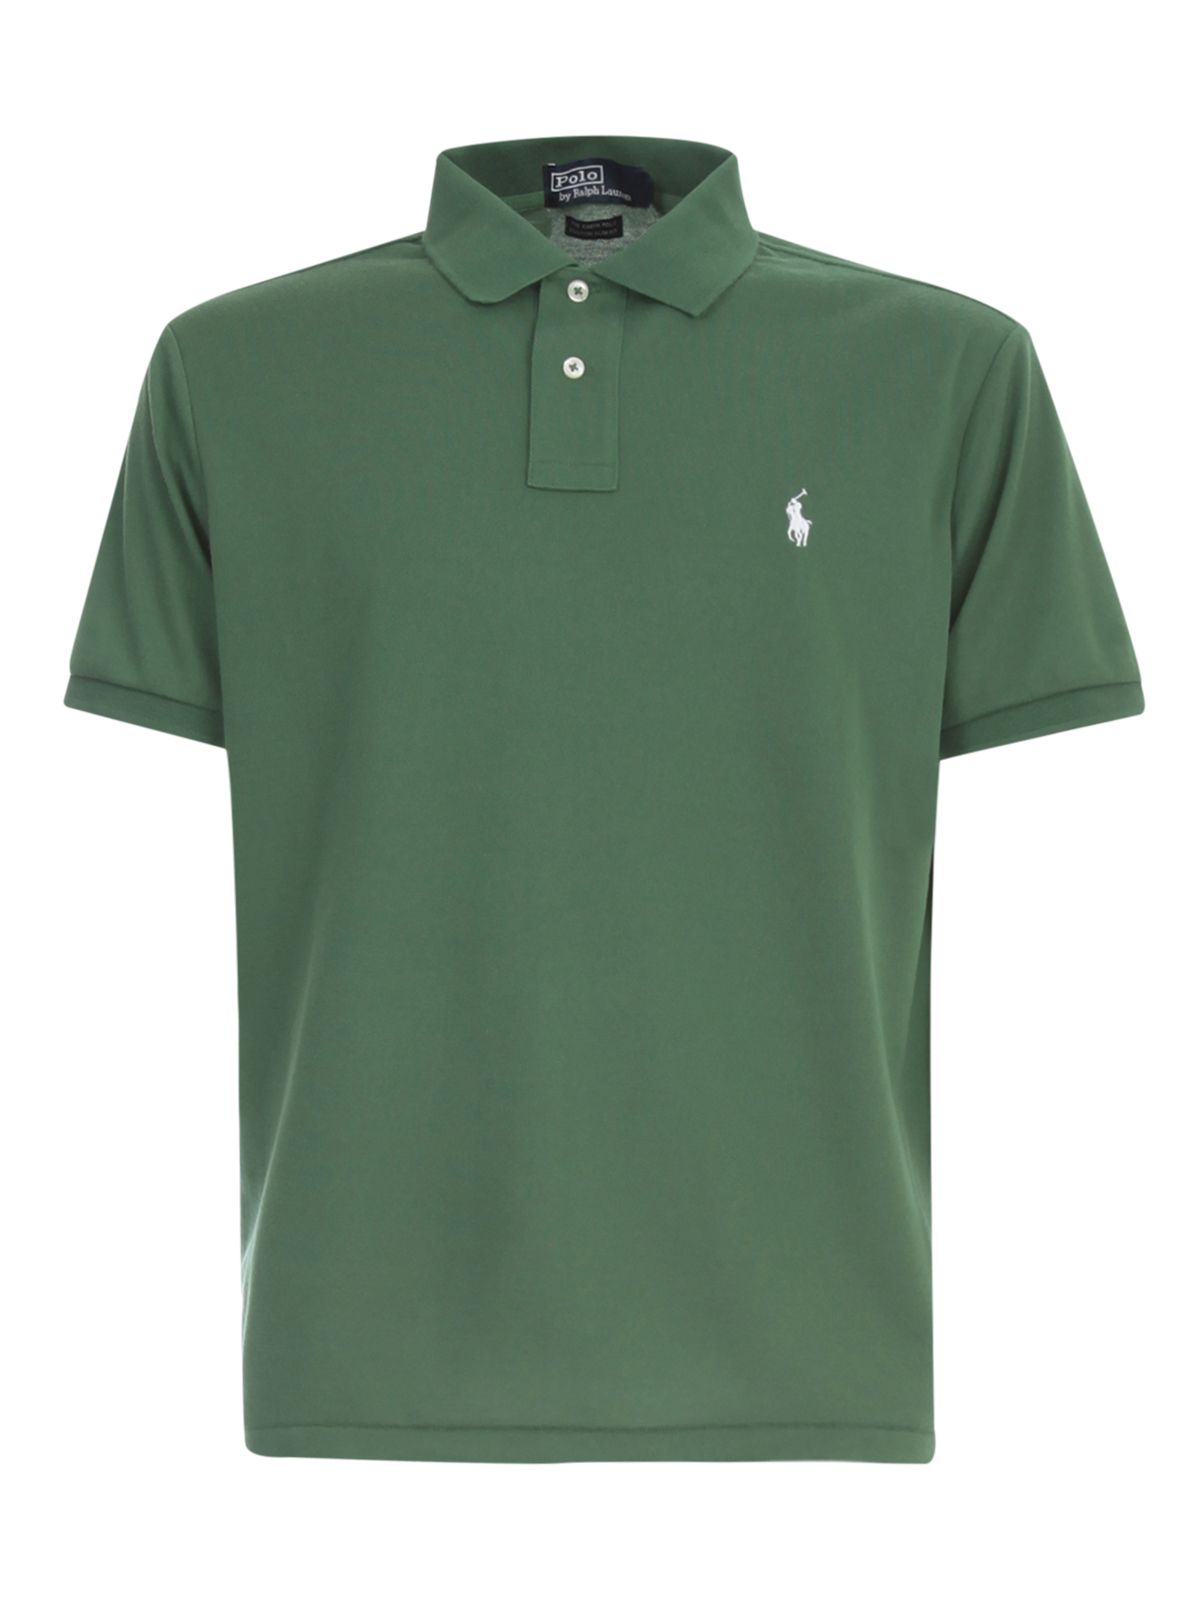 Polo Ralph Lauren Green Polo Shirt